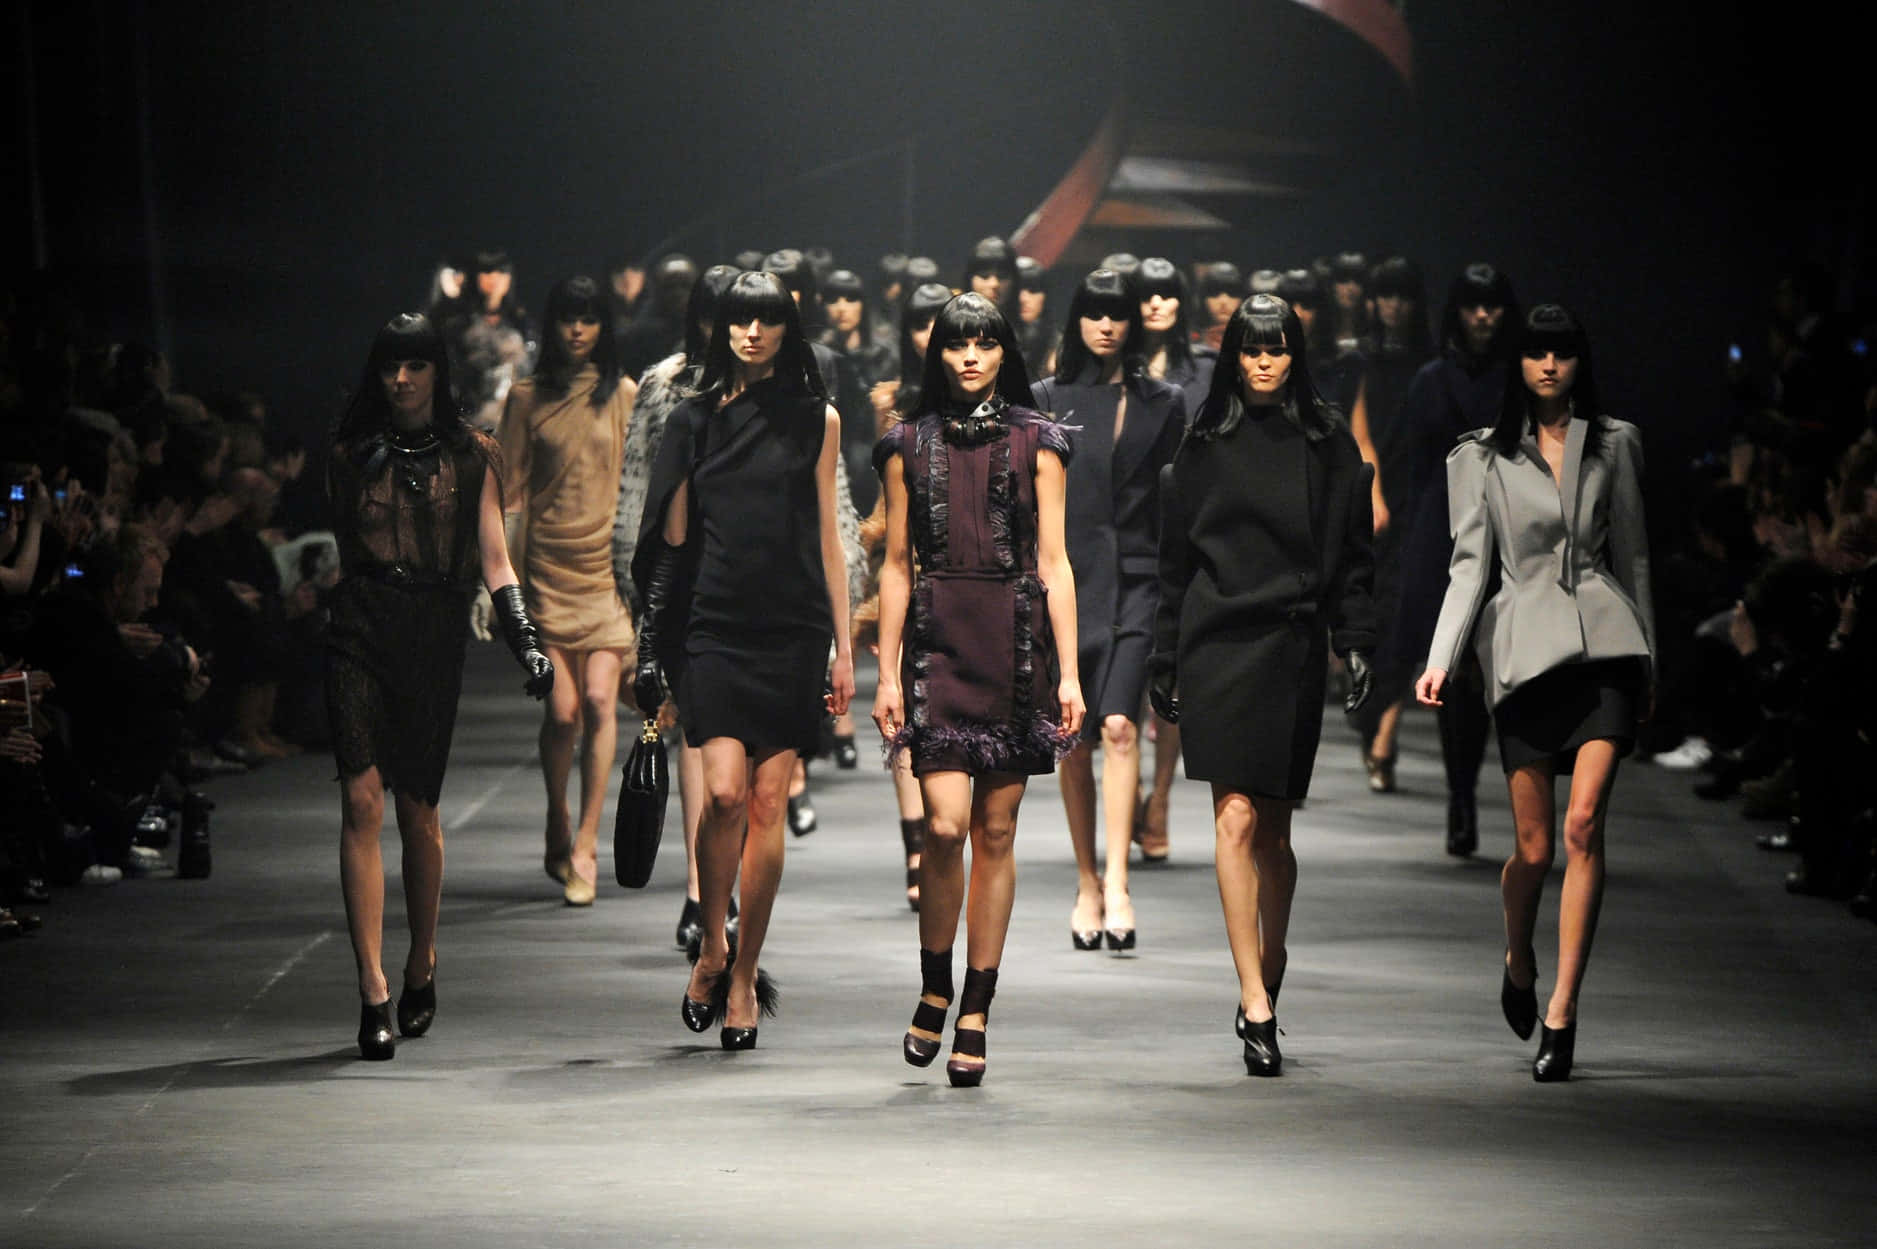 Caption: Lanvin Models Strutting the Runway at a Fashion Show Wallpaper